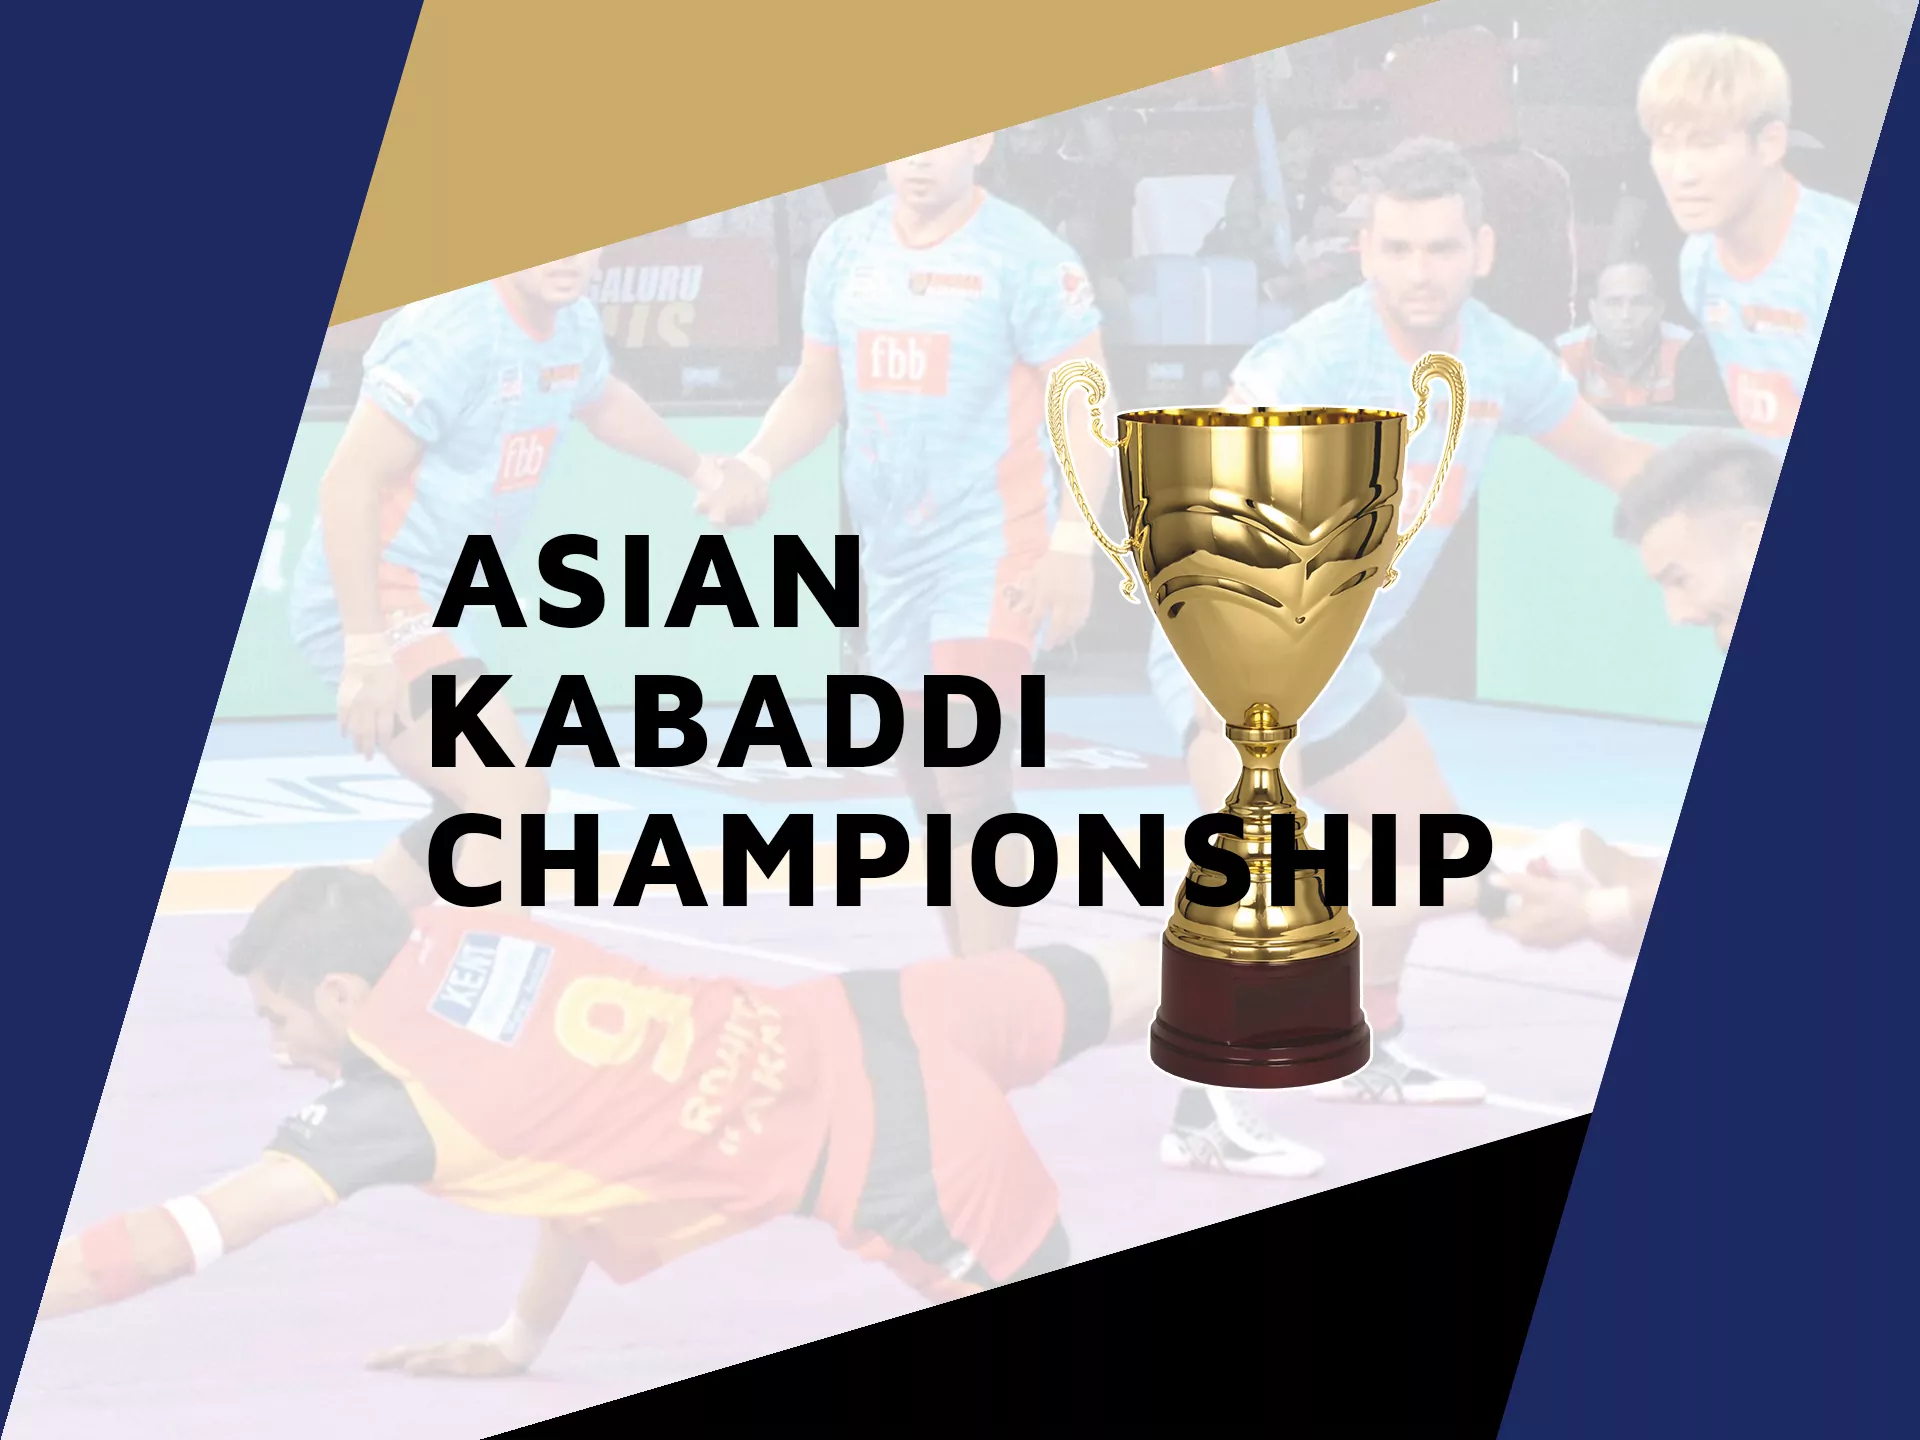 Asian Kabaddi Championship is a best tournament for watching Kabaddi.